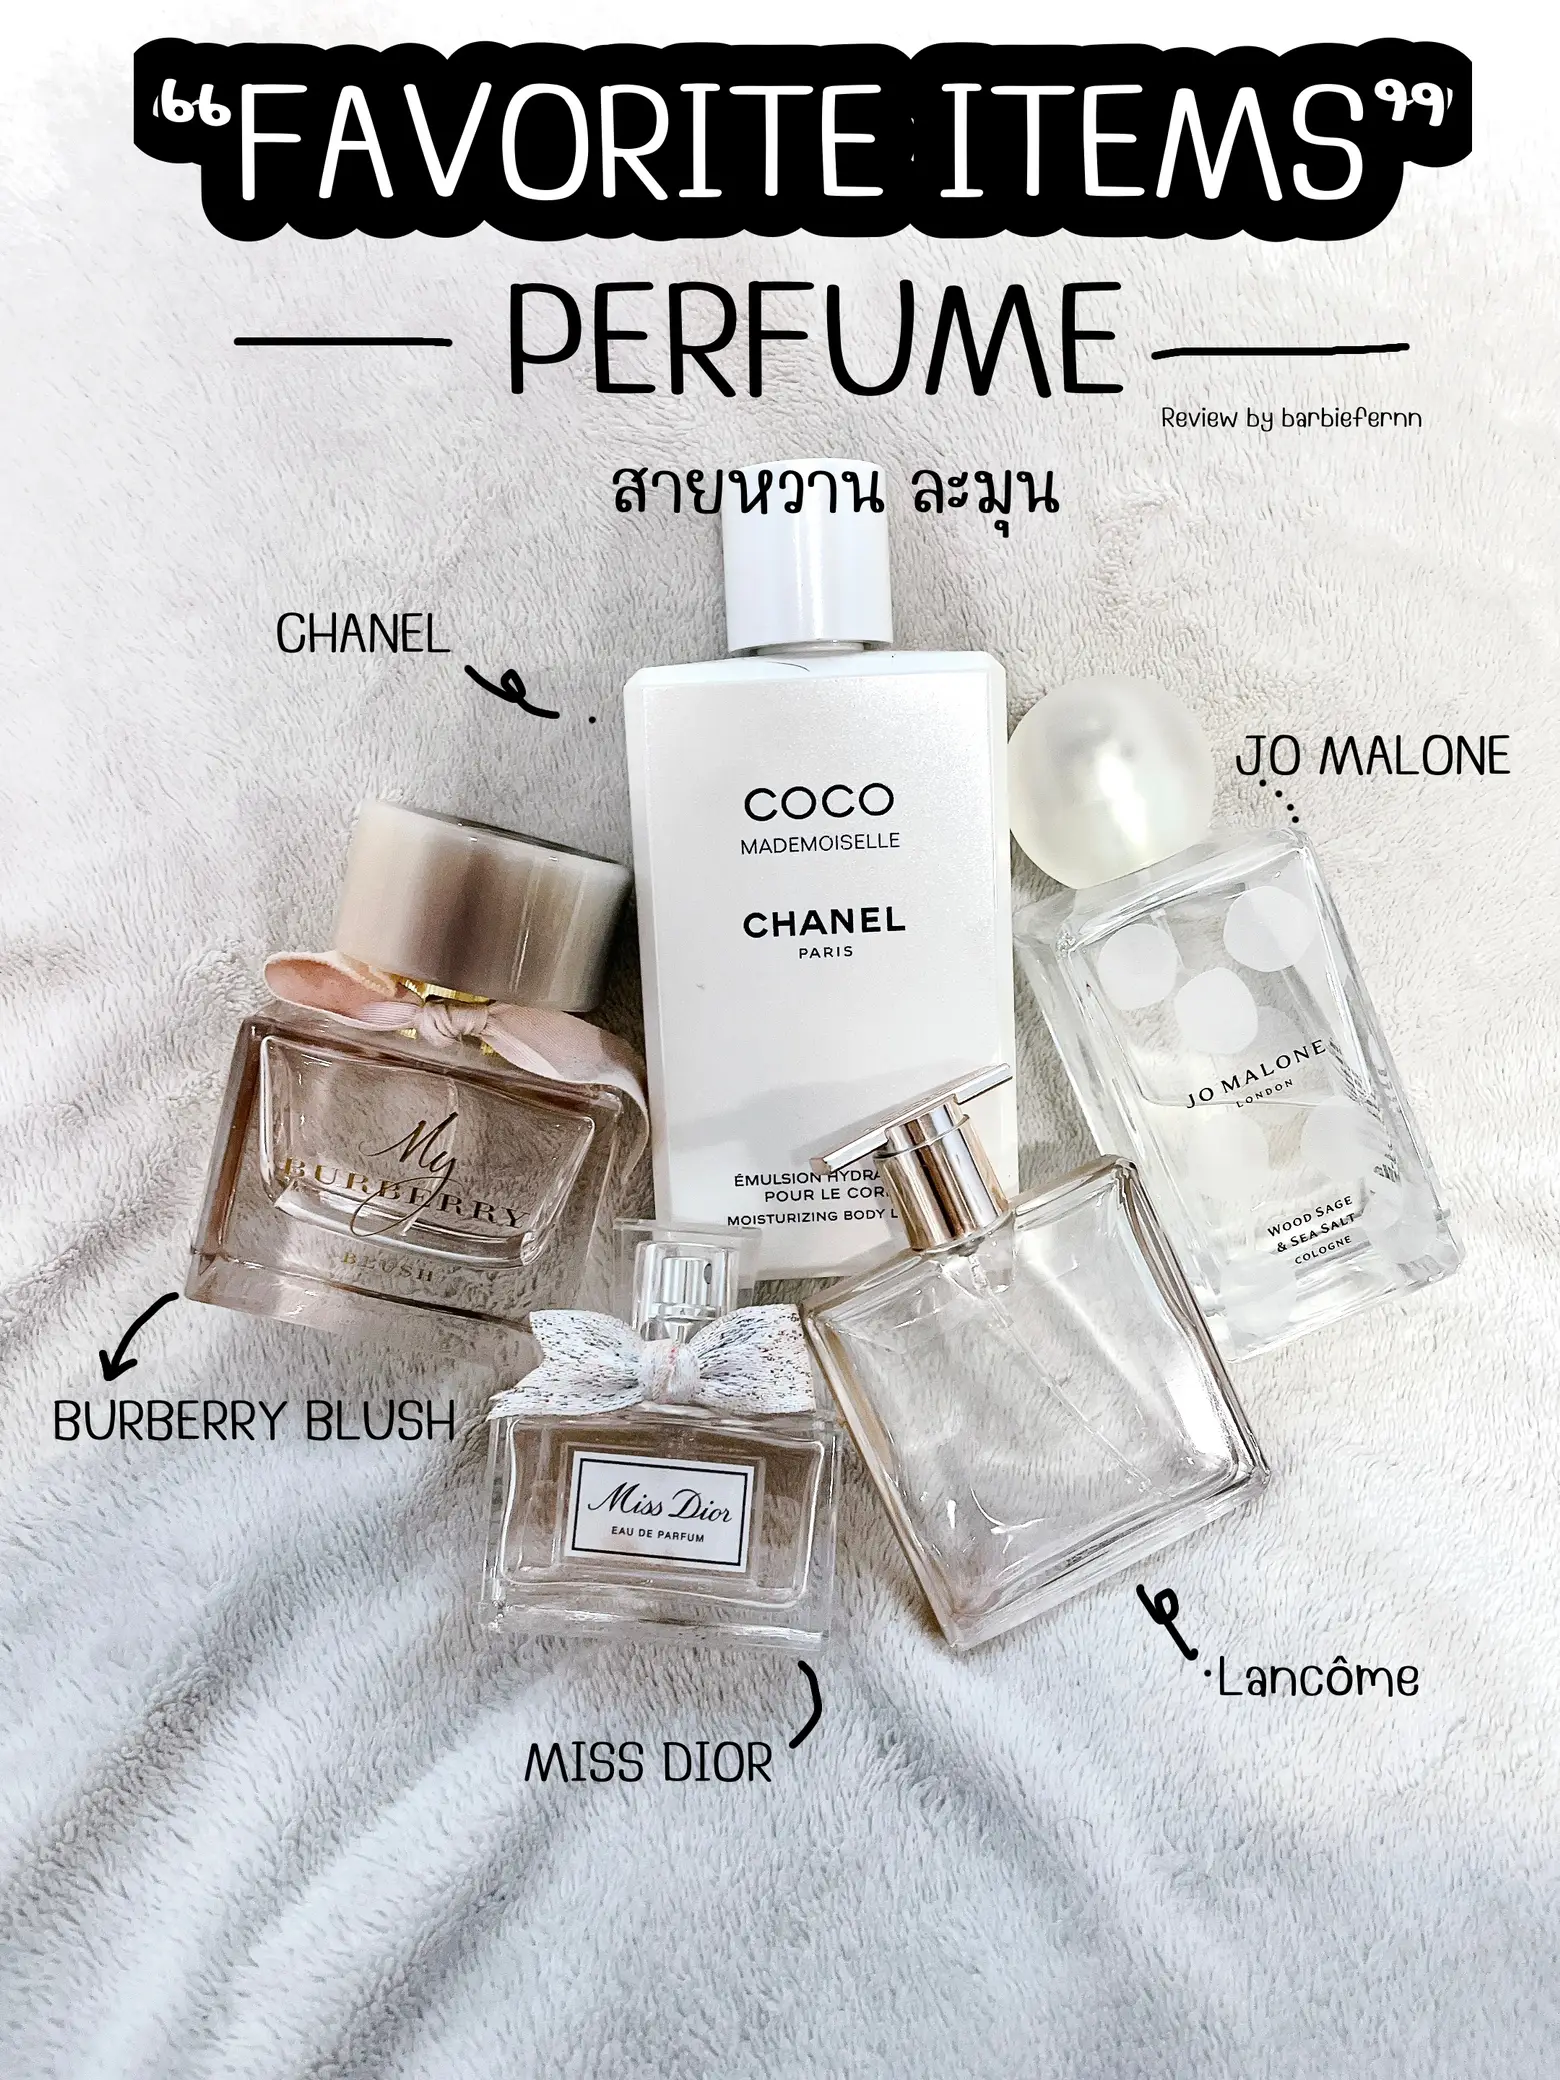 Chanel Coco Mademoiselle Eau de Parfum Intense Spray - 1.7 oz